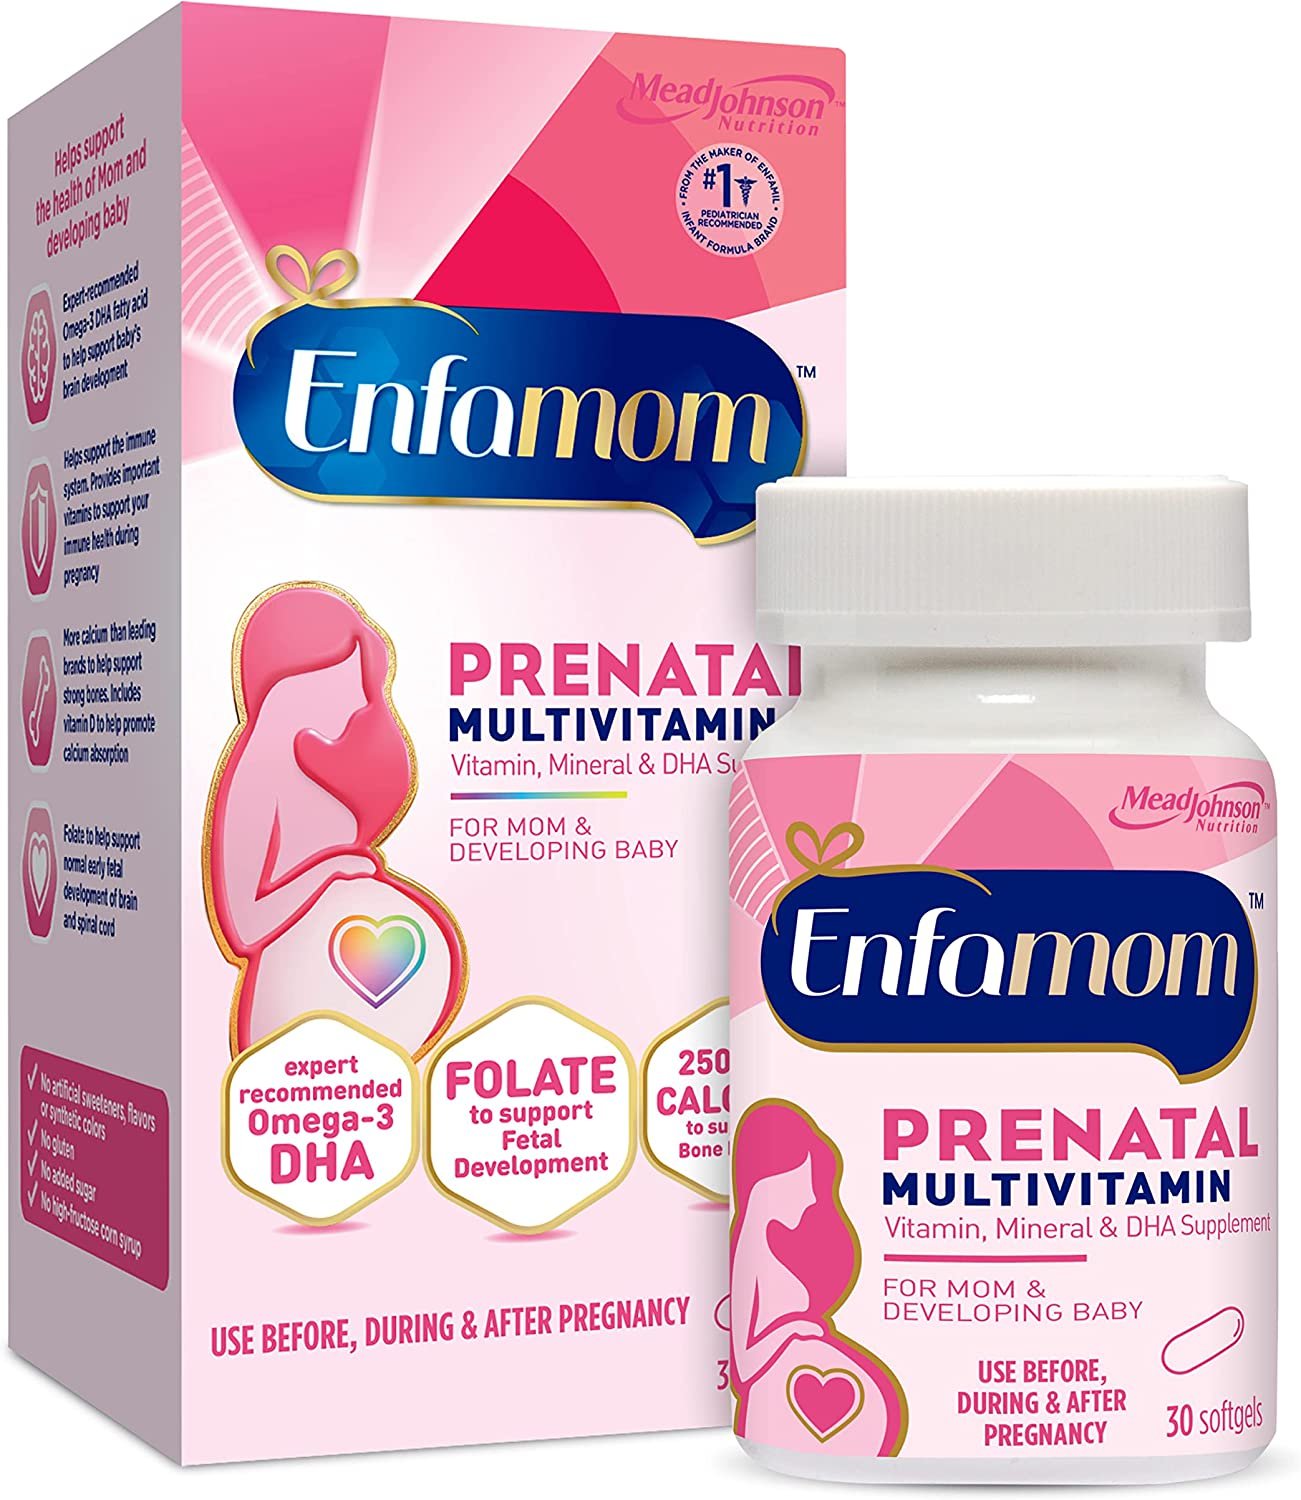 Enfamil Enfamom Prenatal Vitamin & Mineral, Supplement, 30 softgels (1 month supply)